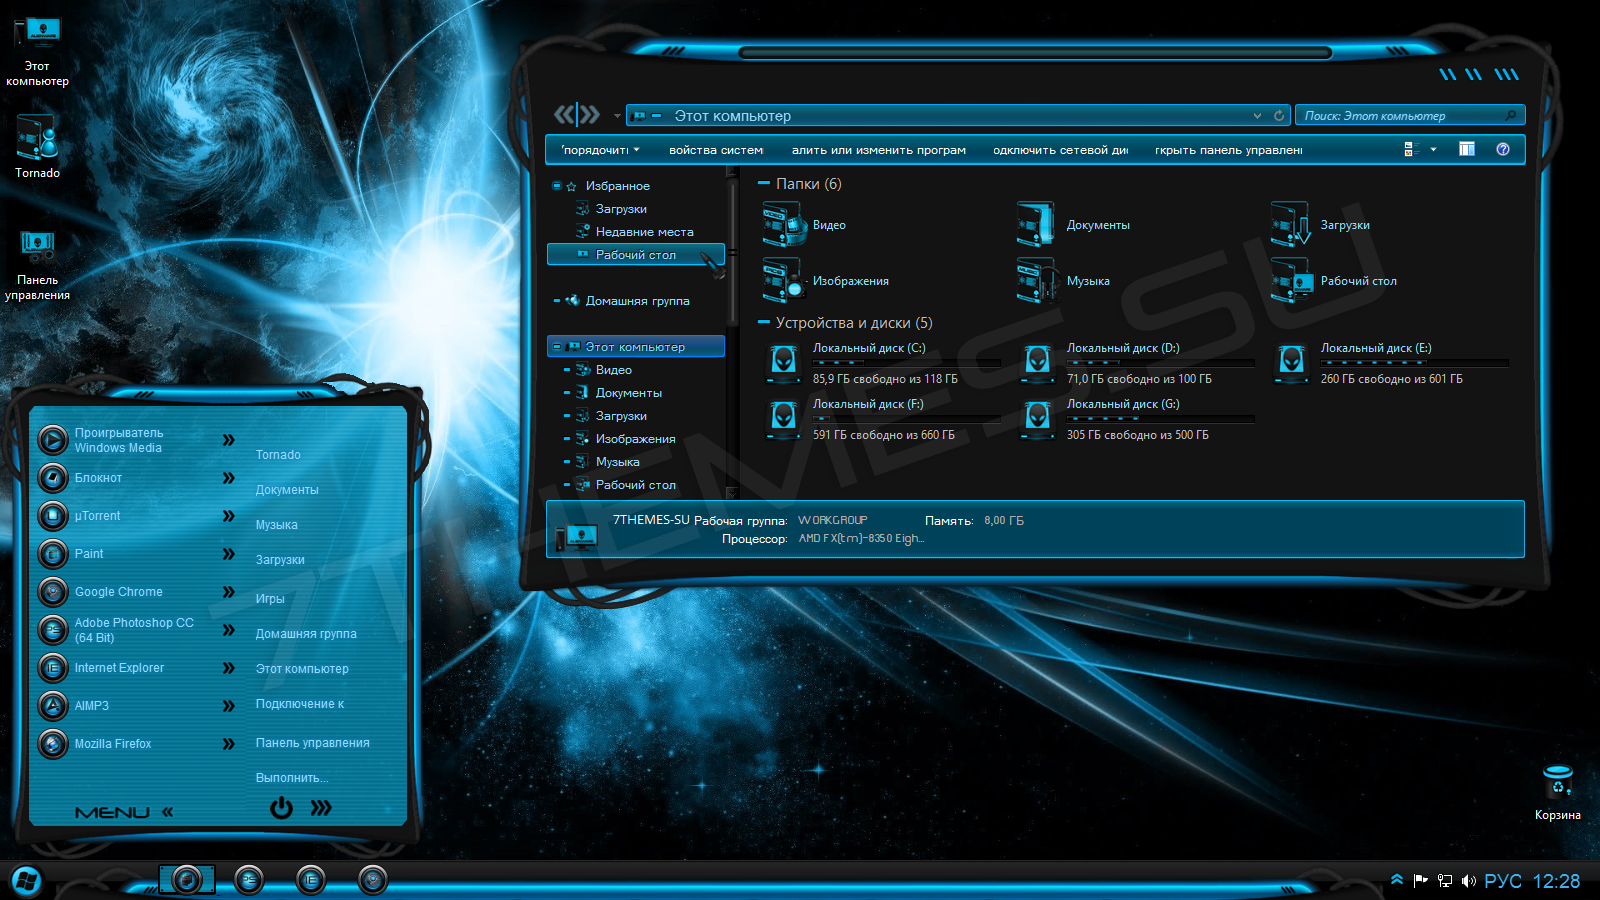 Arius Windows 8 Themes Download For PC Free desktop wallpaper